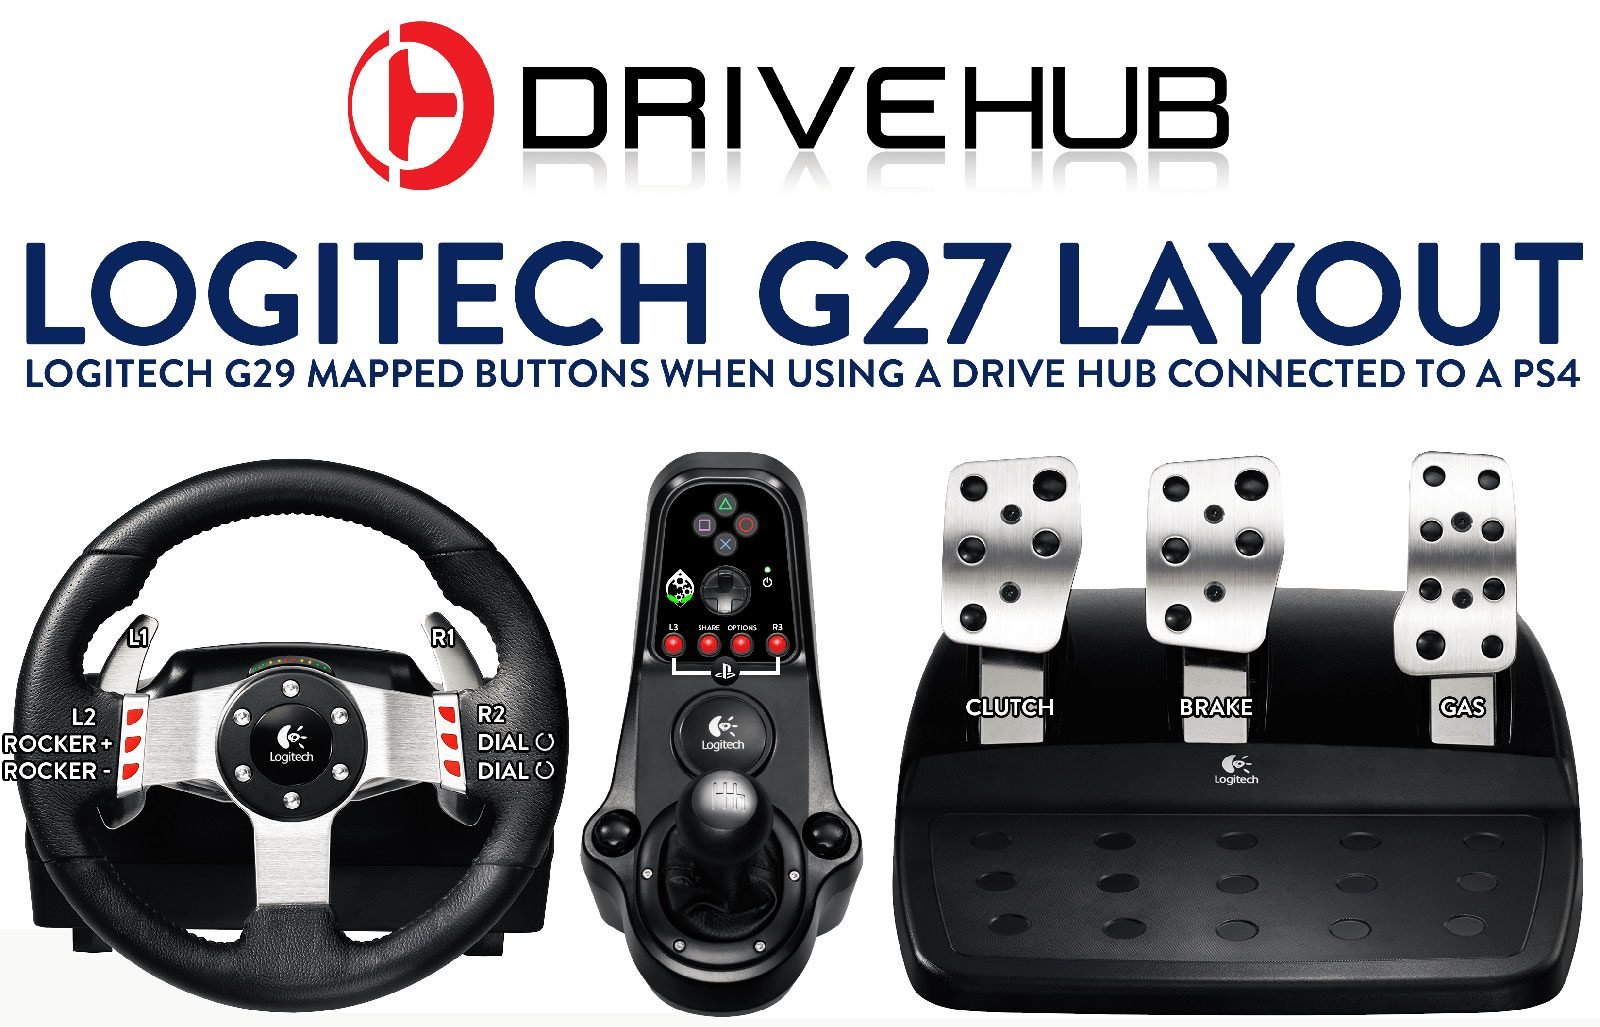 drive-hub-faq-logitech-g27-layout-01.jpg